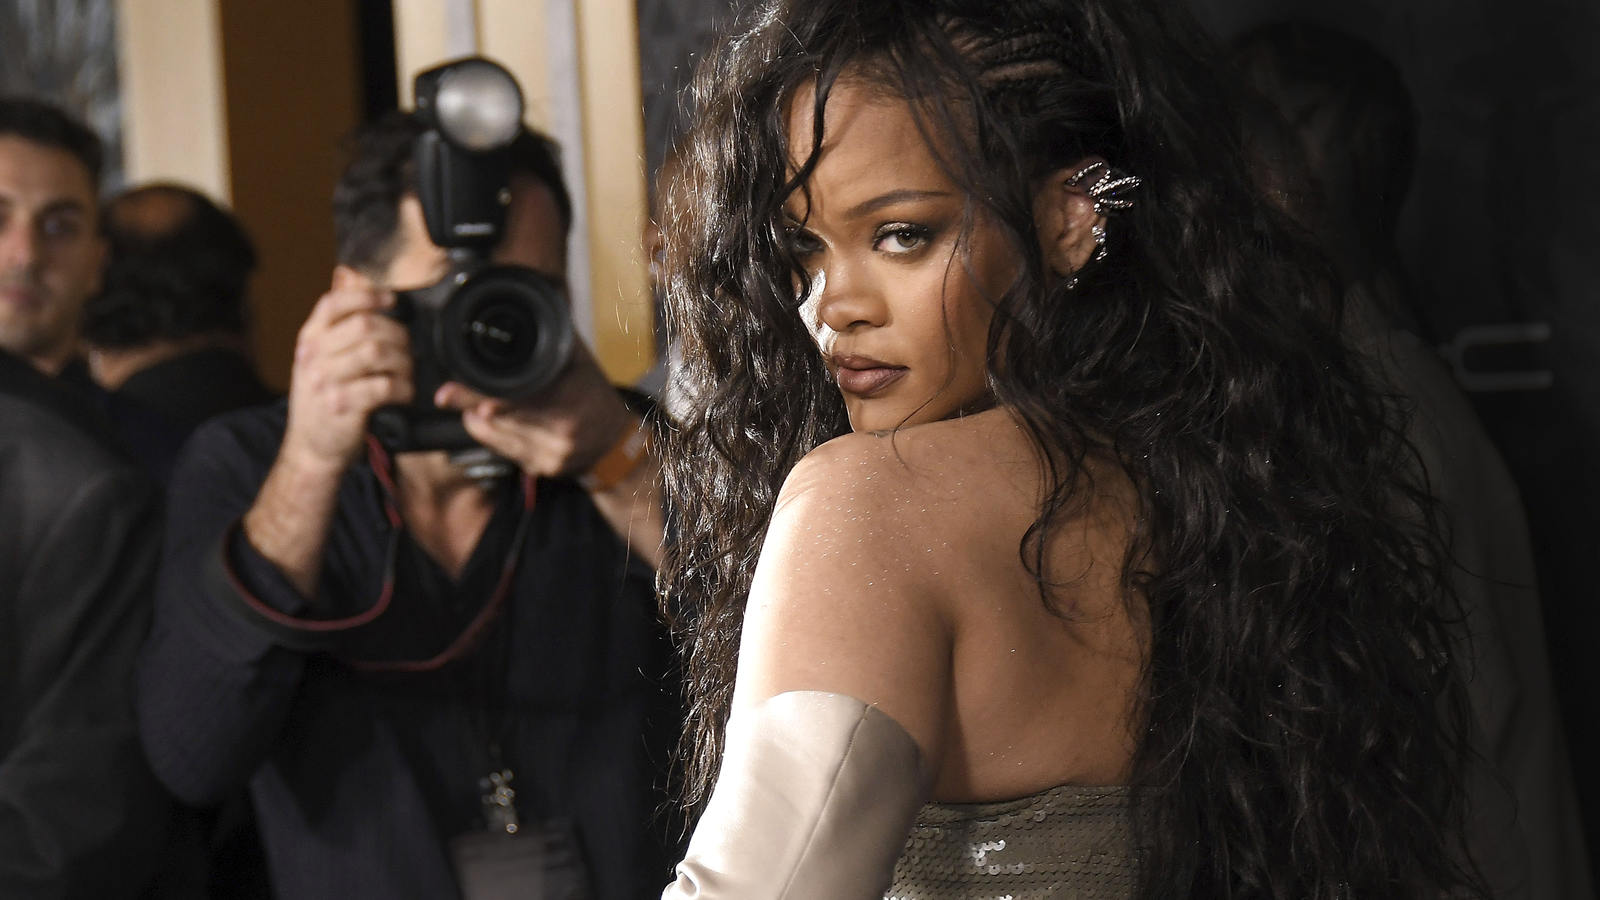 Rihanna tells paparazzi that new music is coming soon soon soon